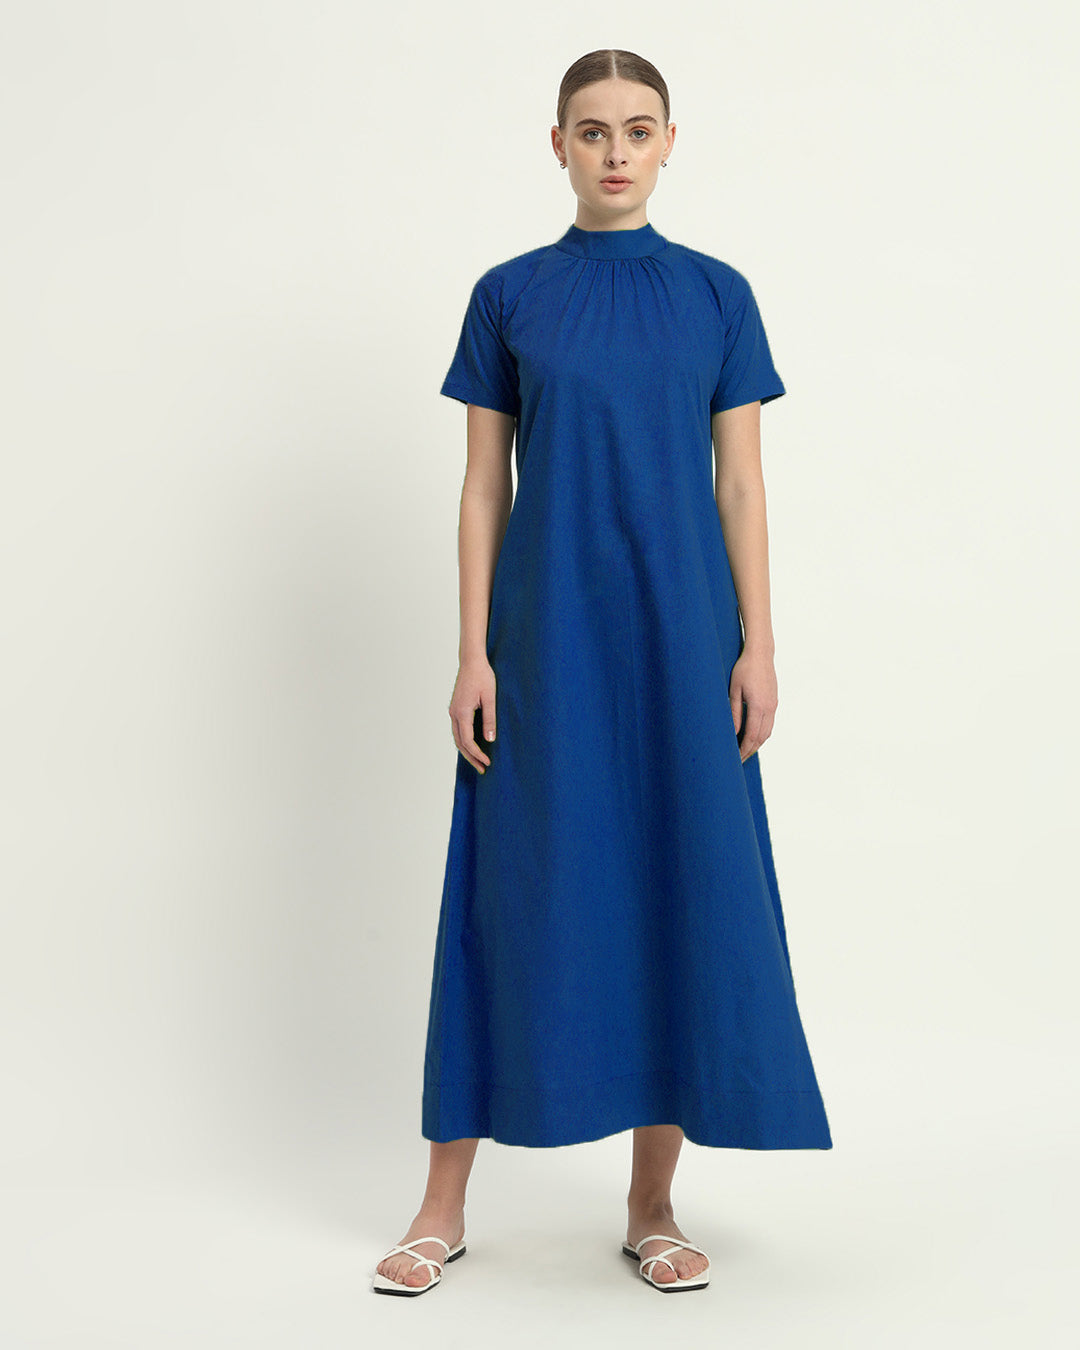 The Cobalt Hermon Cotton Dress